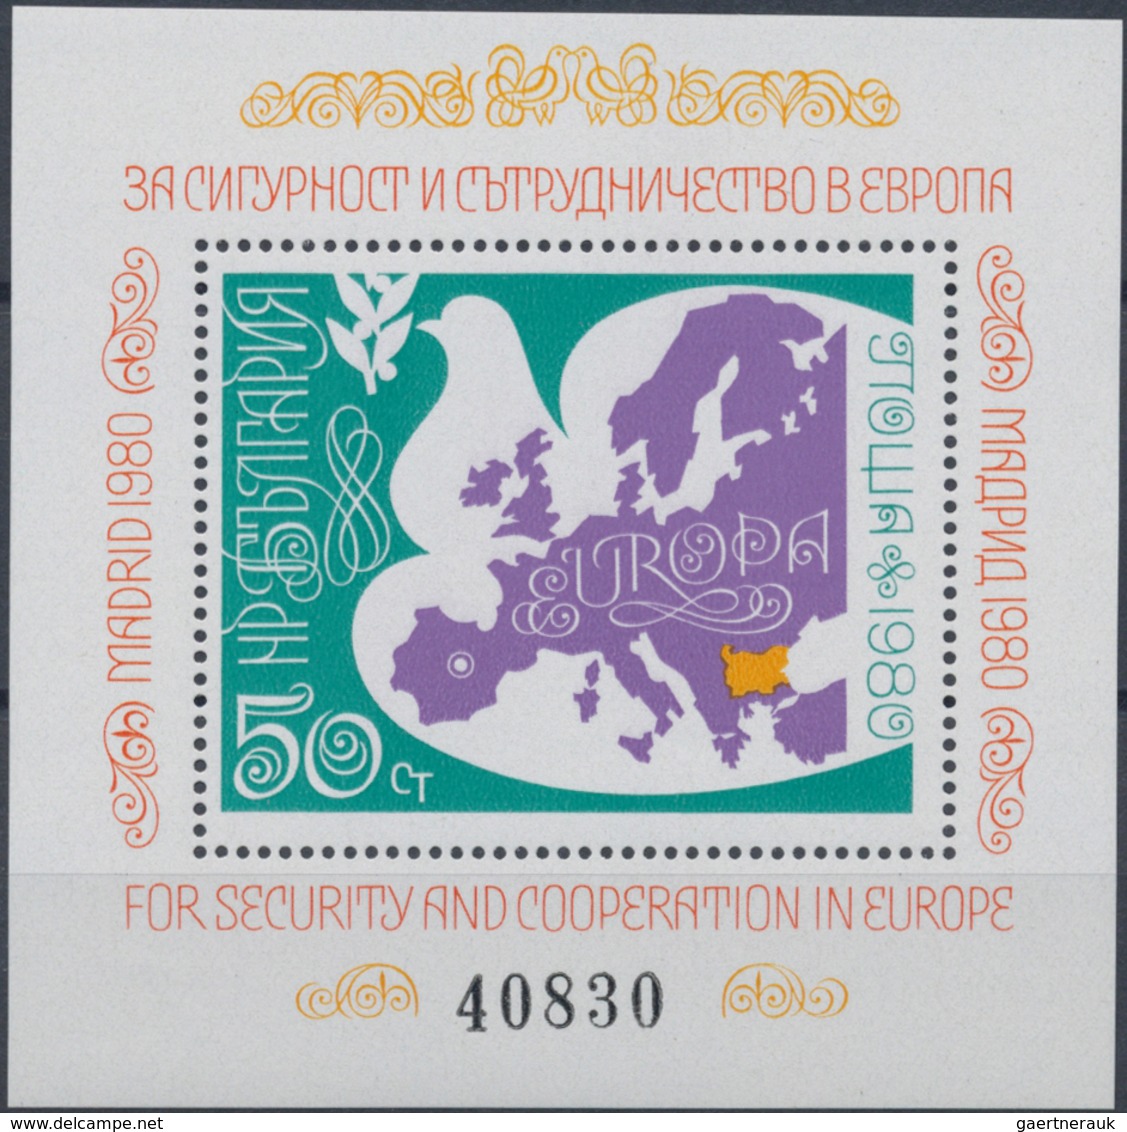 Bulgarien: 1979/1985, stock of the following souvenir sheets, 300 MNH copies each: Michel block no.